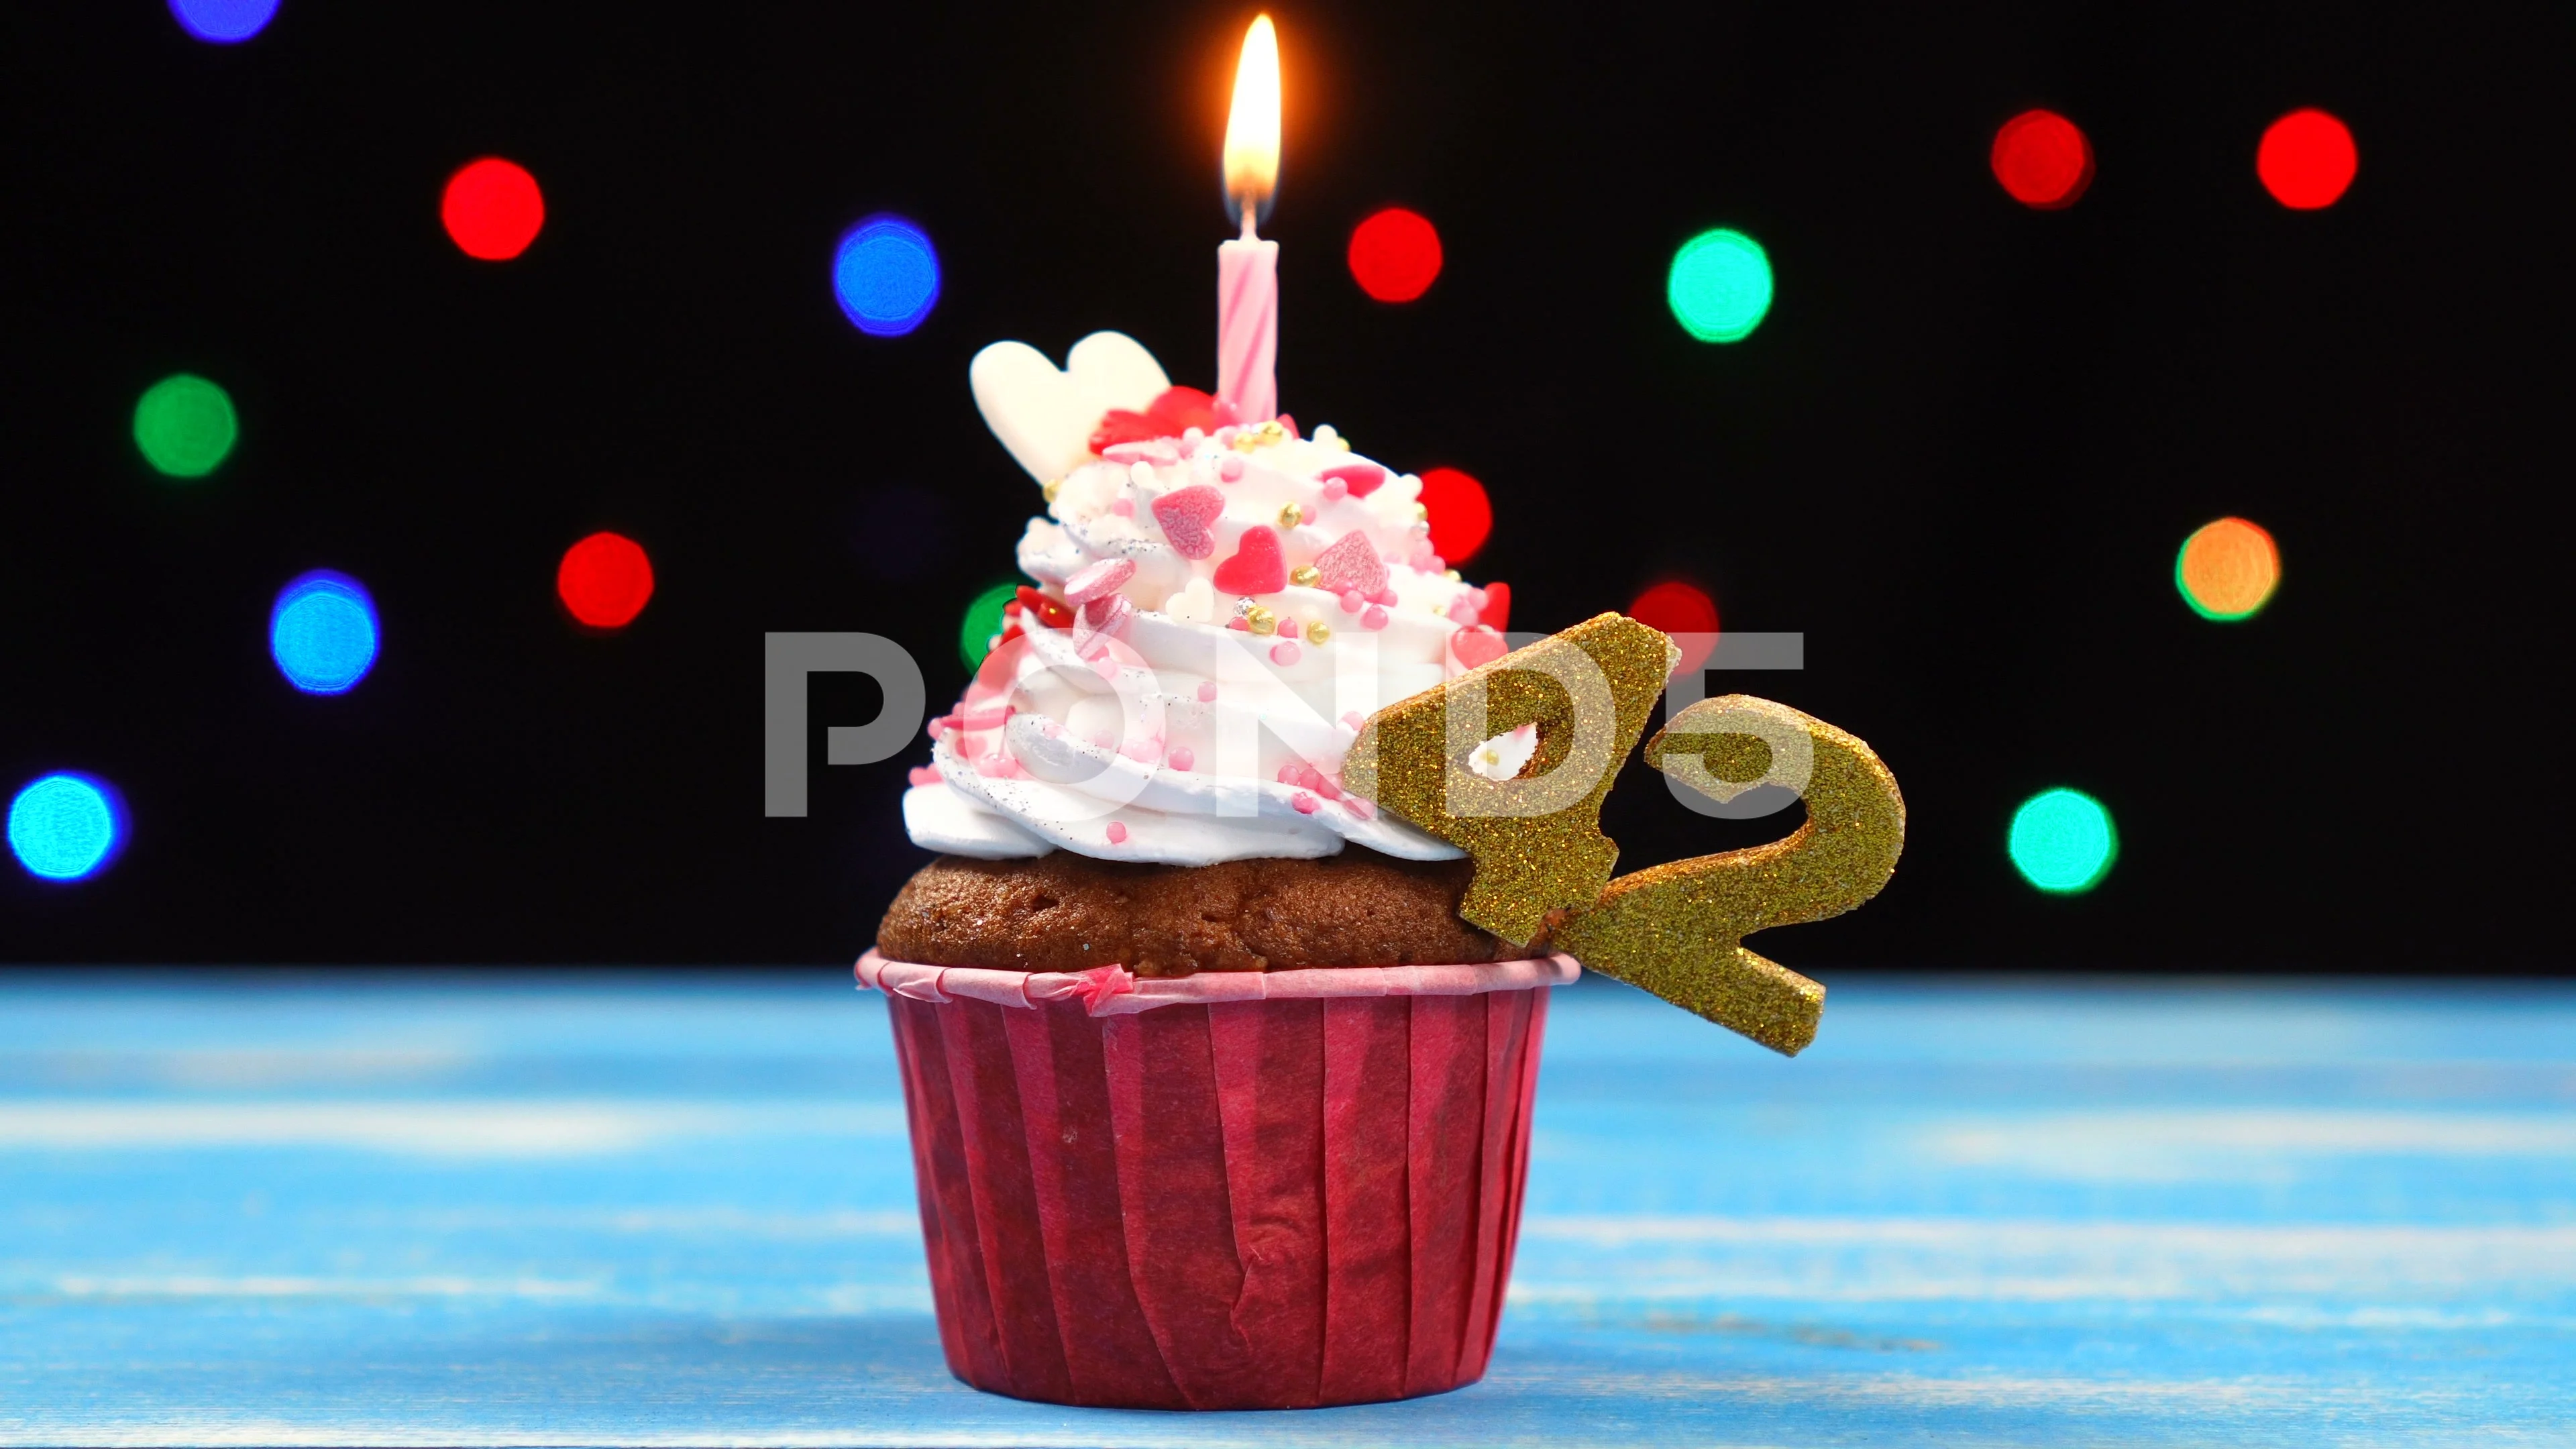 yummy birthday cupcakes